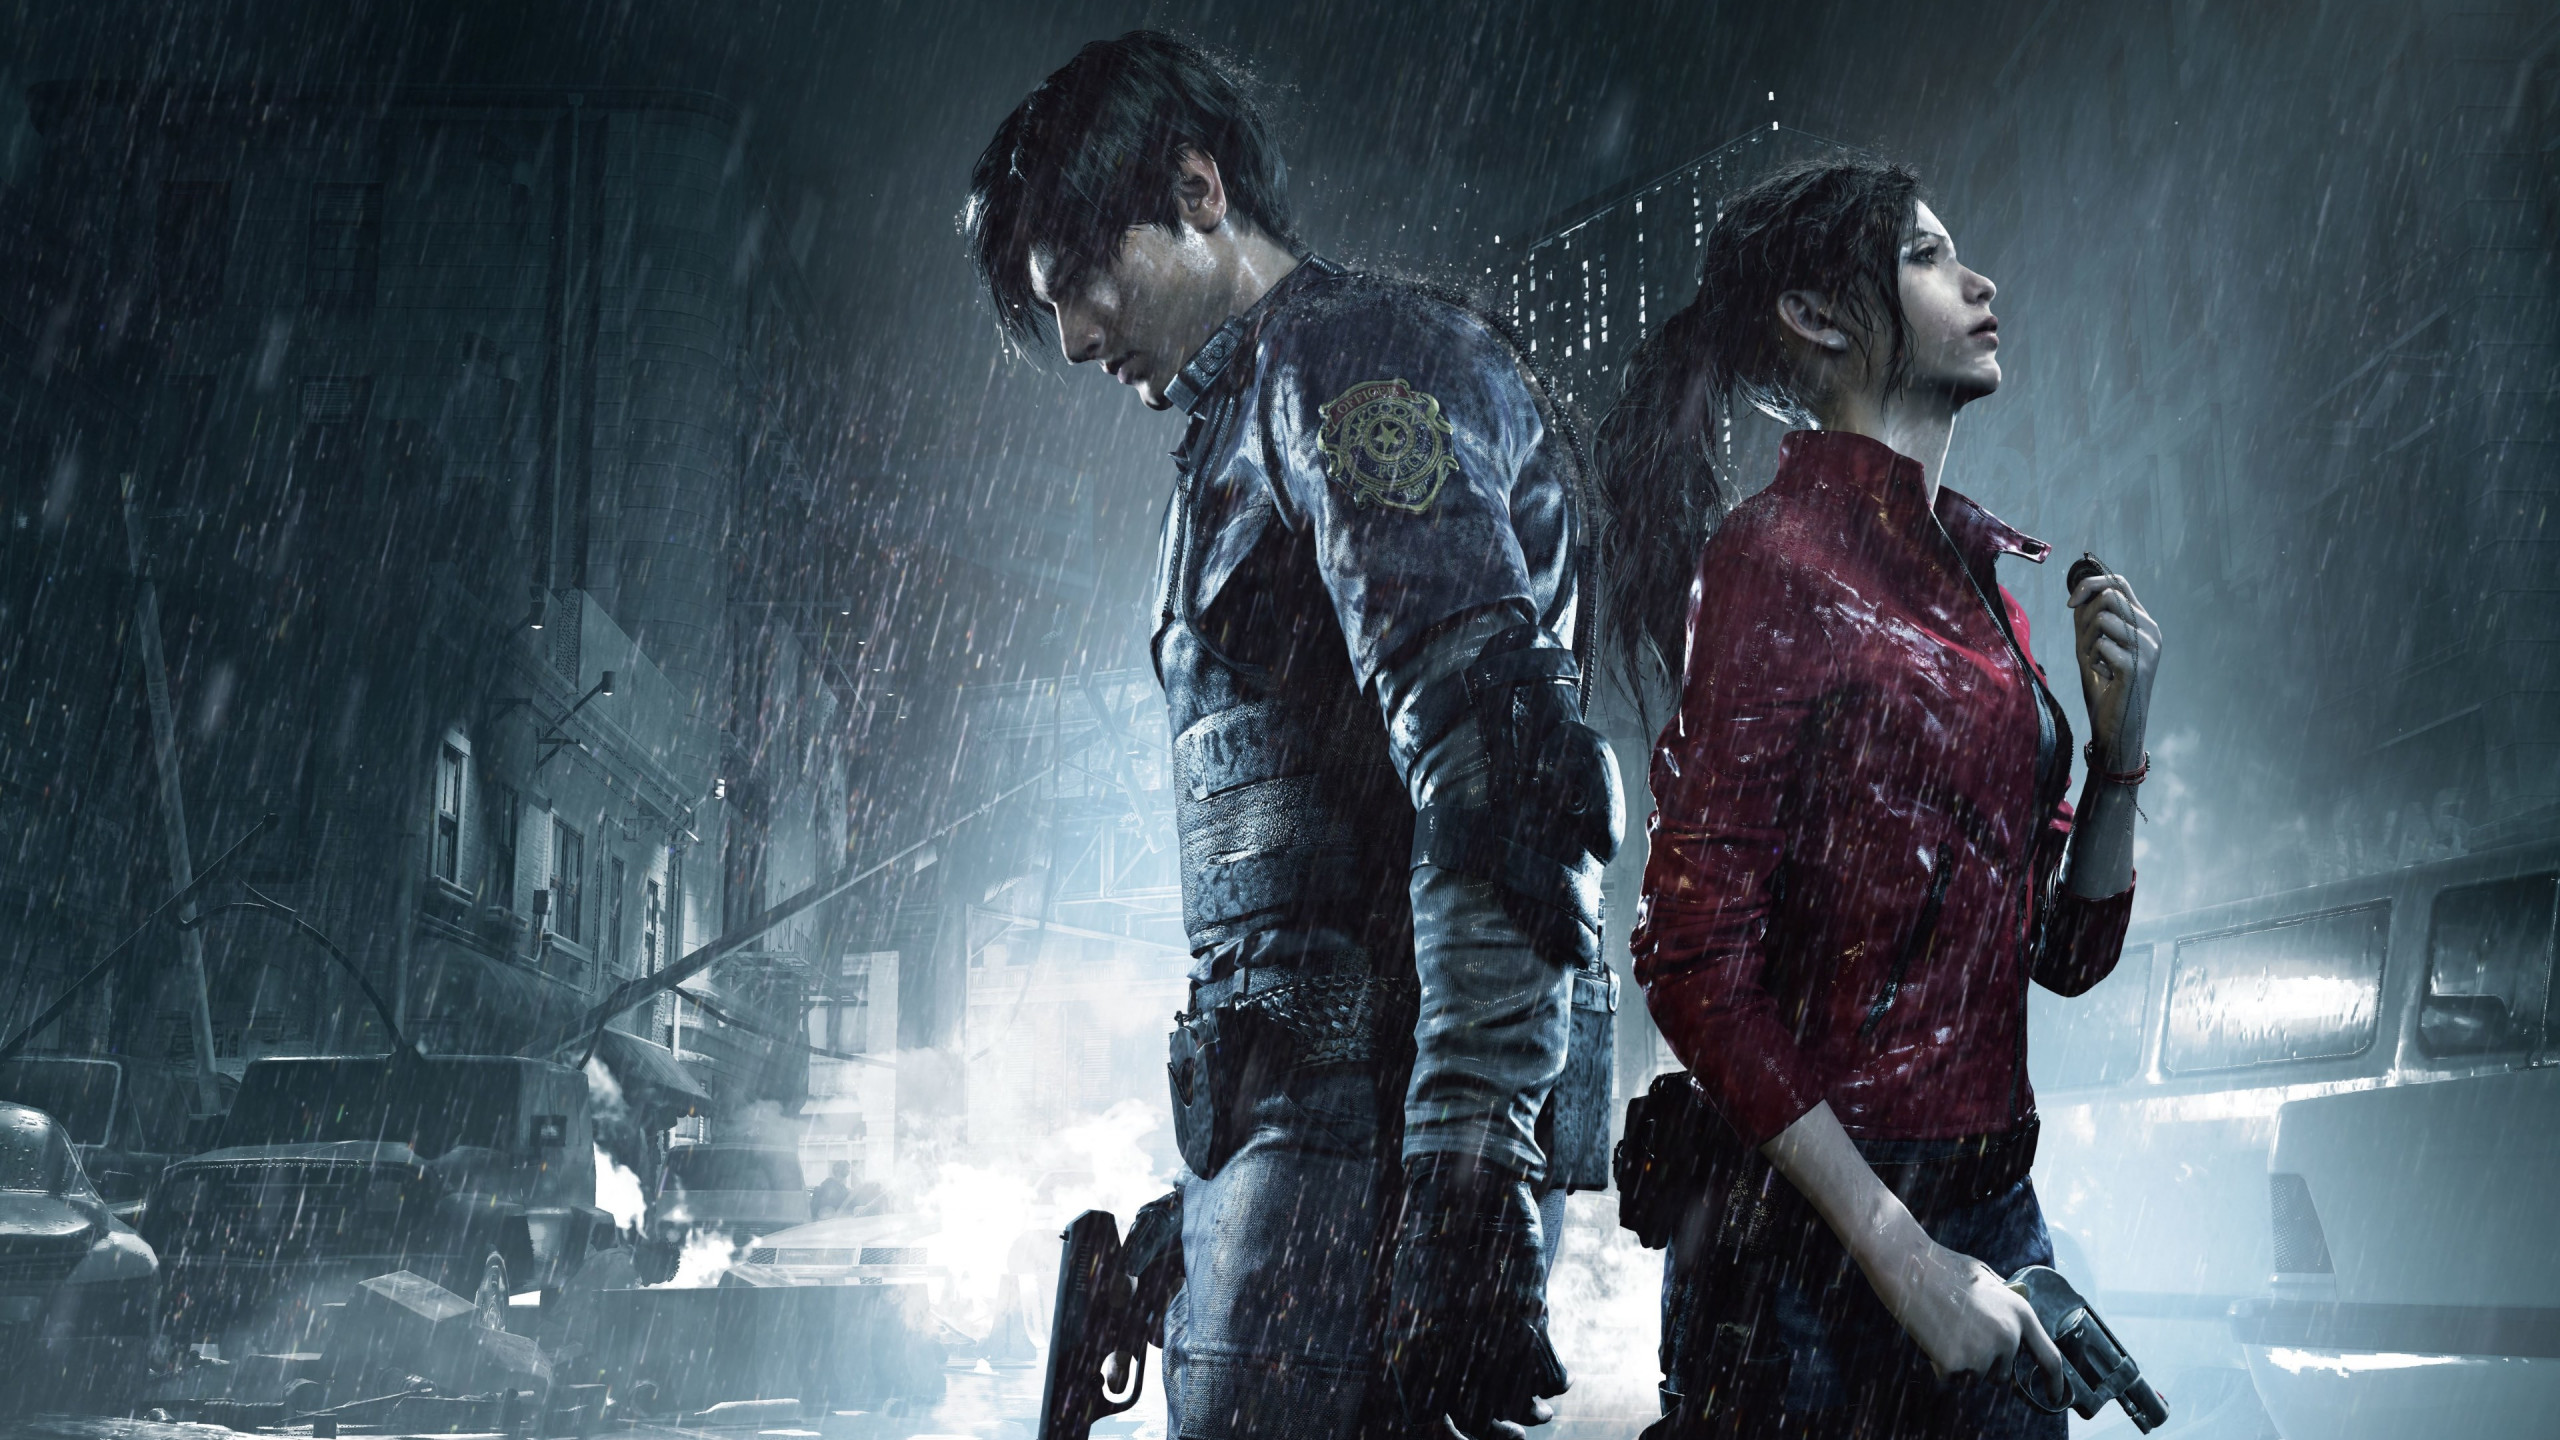 Download wallpaper: Resident Evil 2 2560x1440